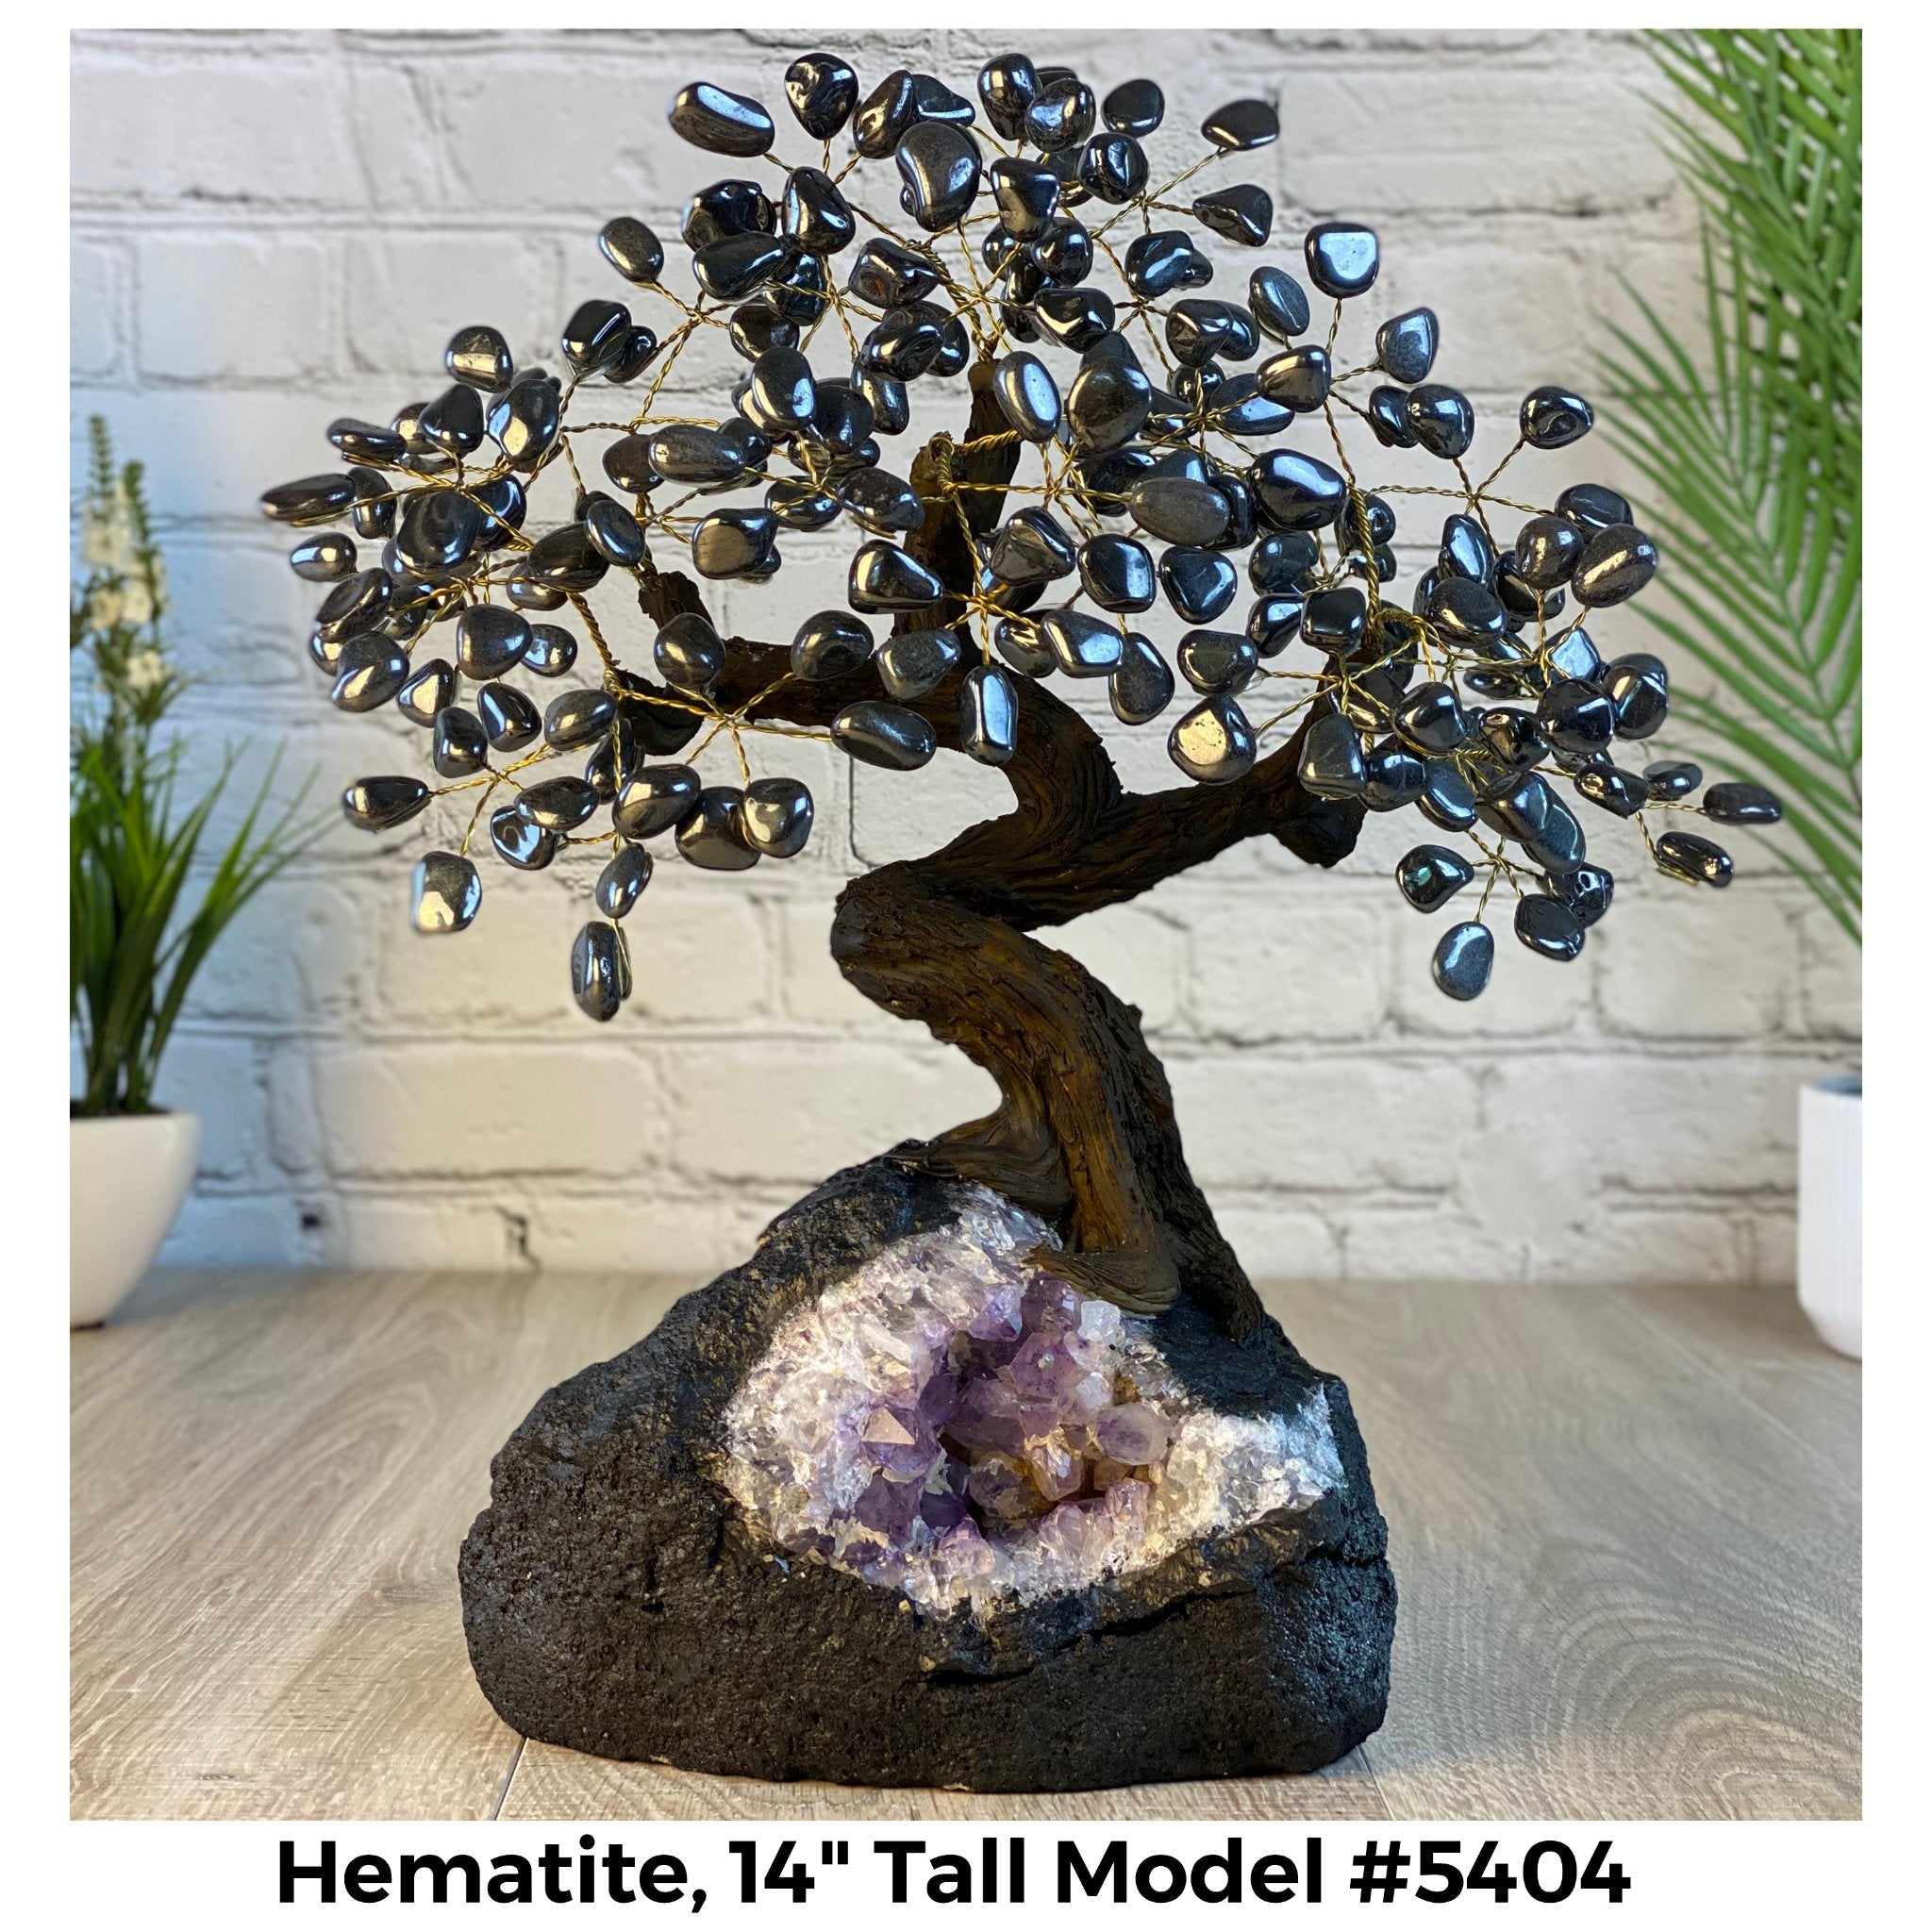 Hematite 14" Tall Handmade Gemstone Tree on a Crystal base, 180 Gems #5404HEMA - Brazil GemsBrazil GemsHematite 14" Tall Handmade Gemstone Tree on a Crystal base, 180 Gems #5404HEMAGemstone Trees5404HEMA